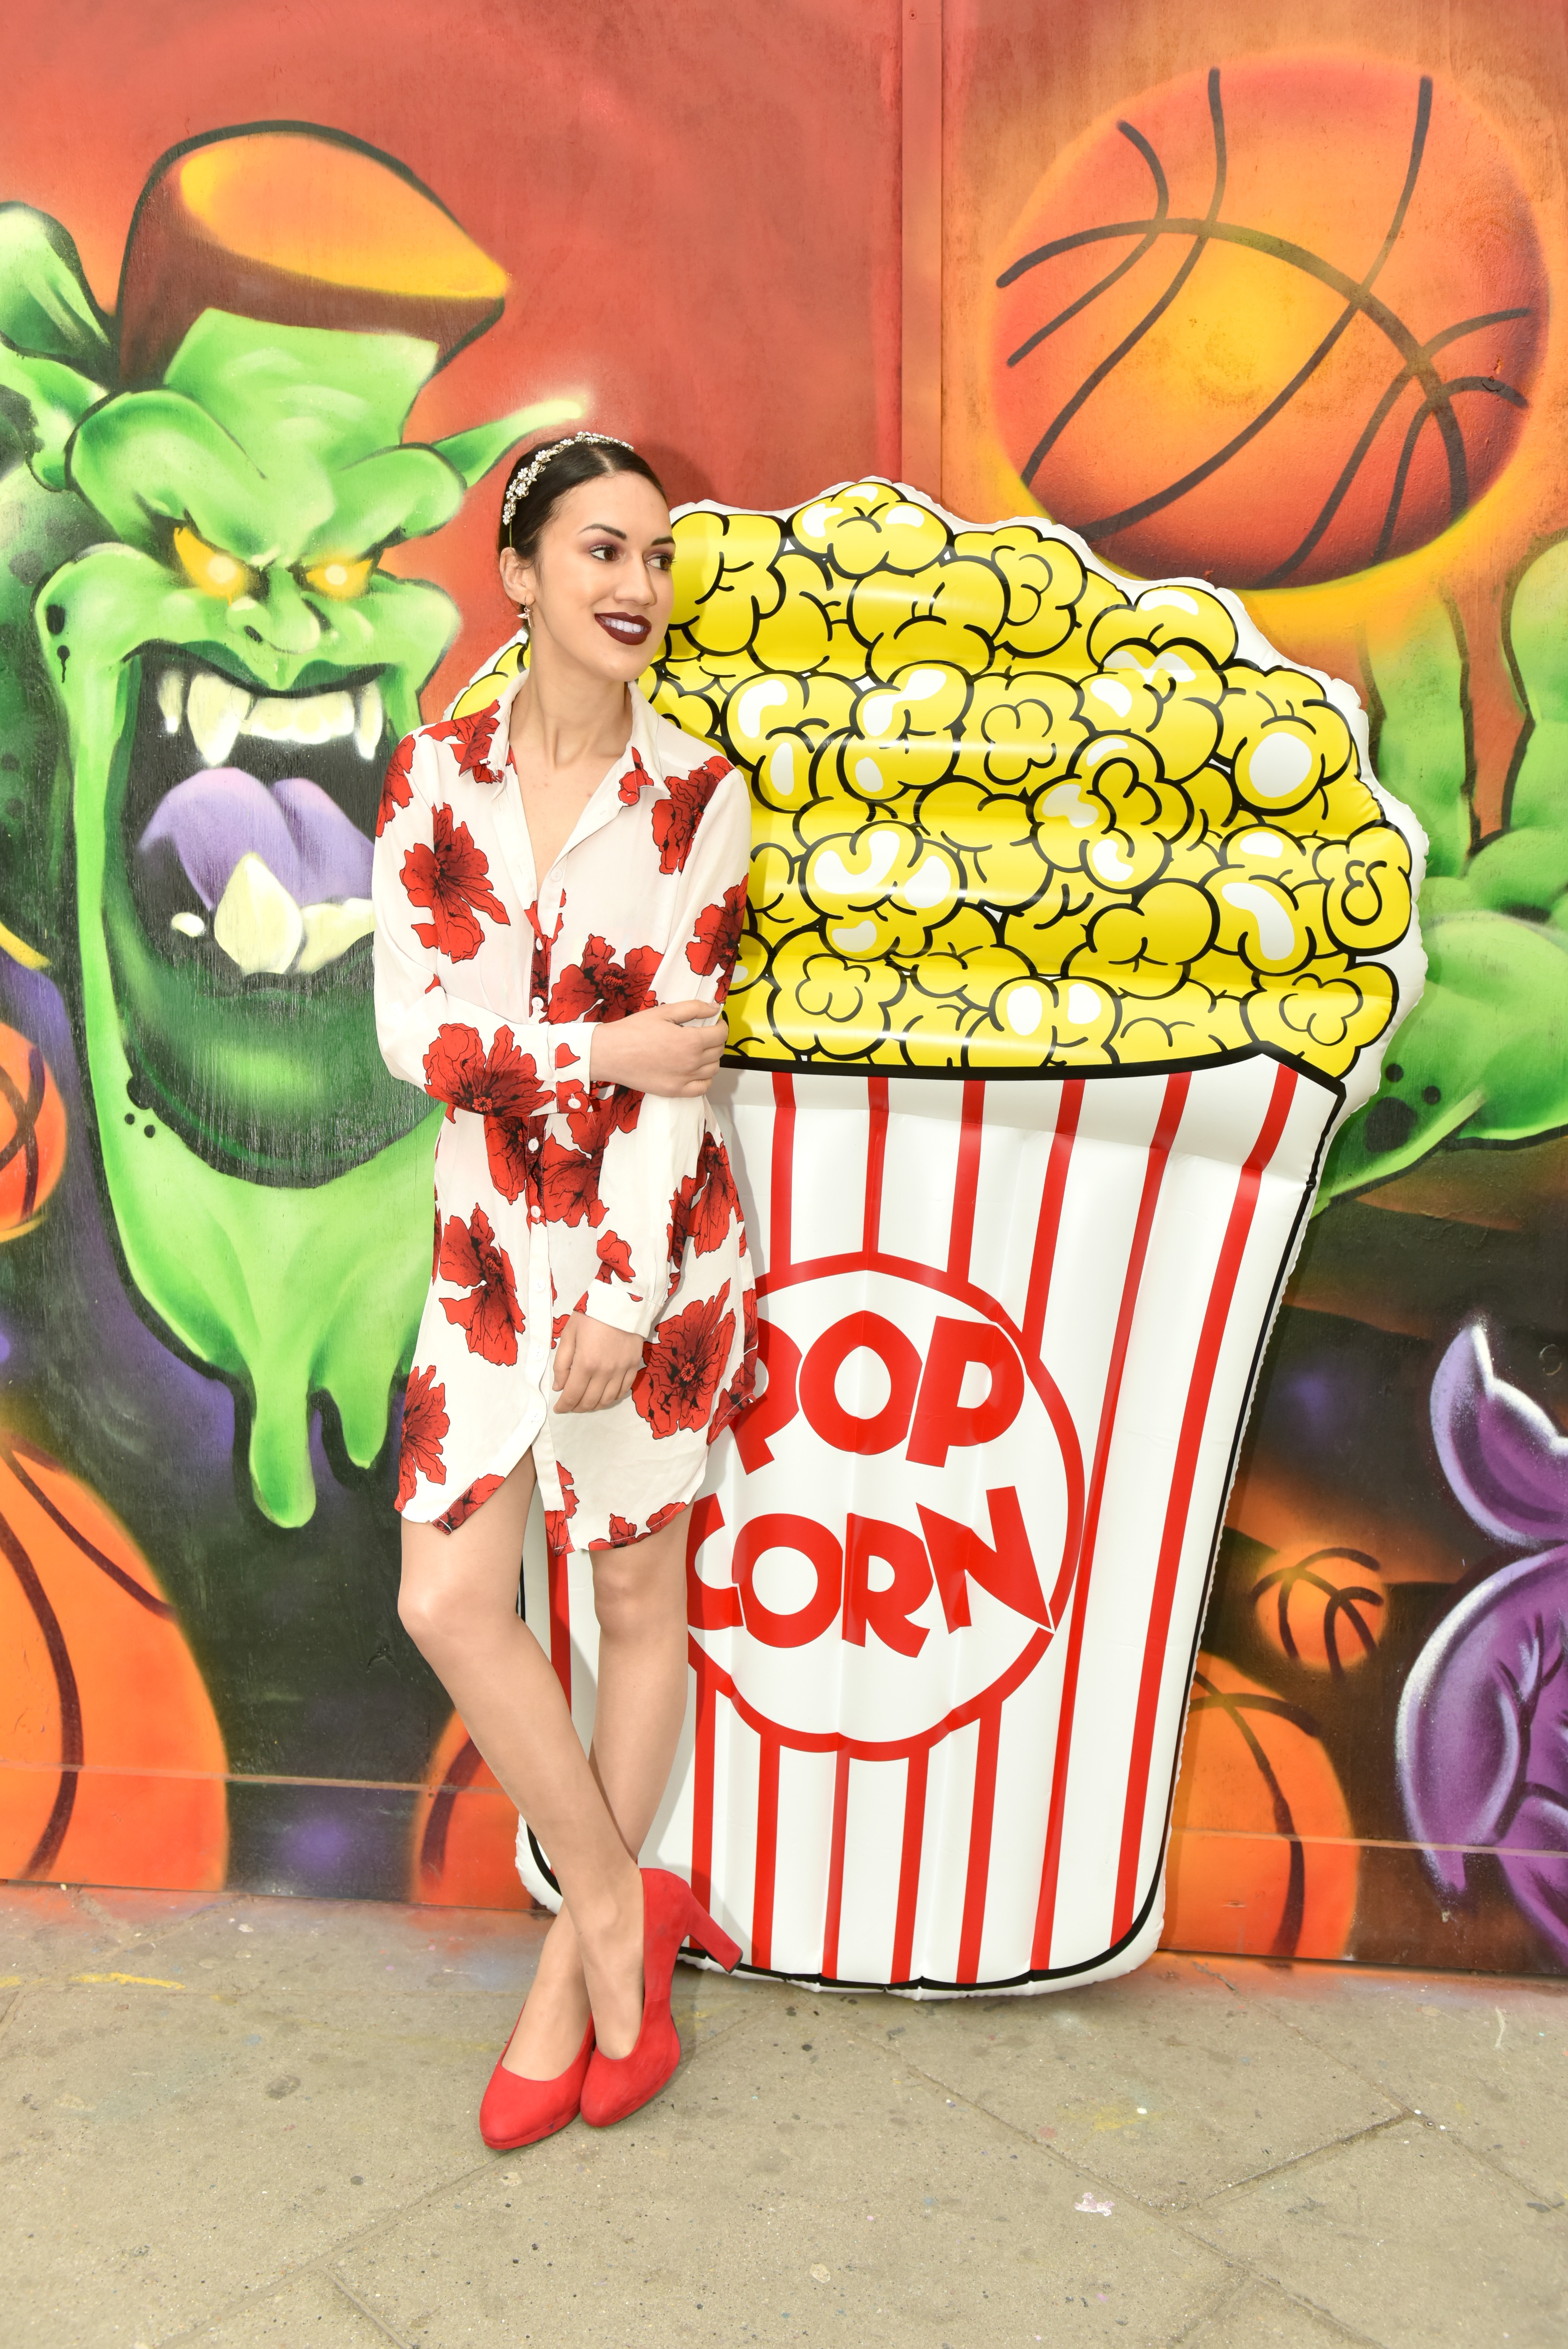 <img src="ana.jpg" alt="ana giant retro popcorn float"> 